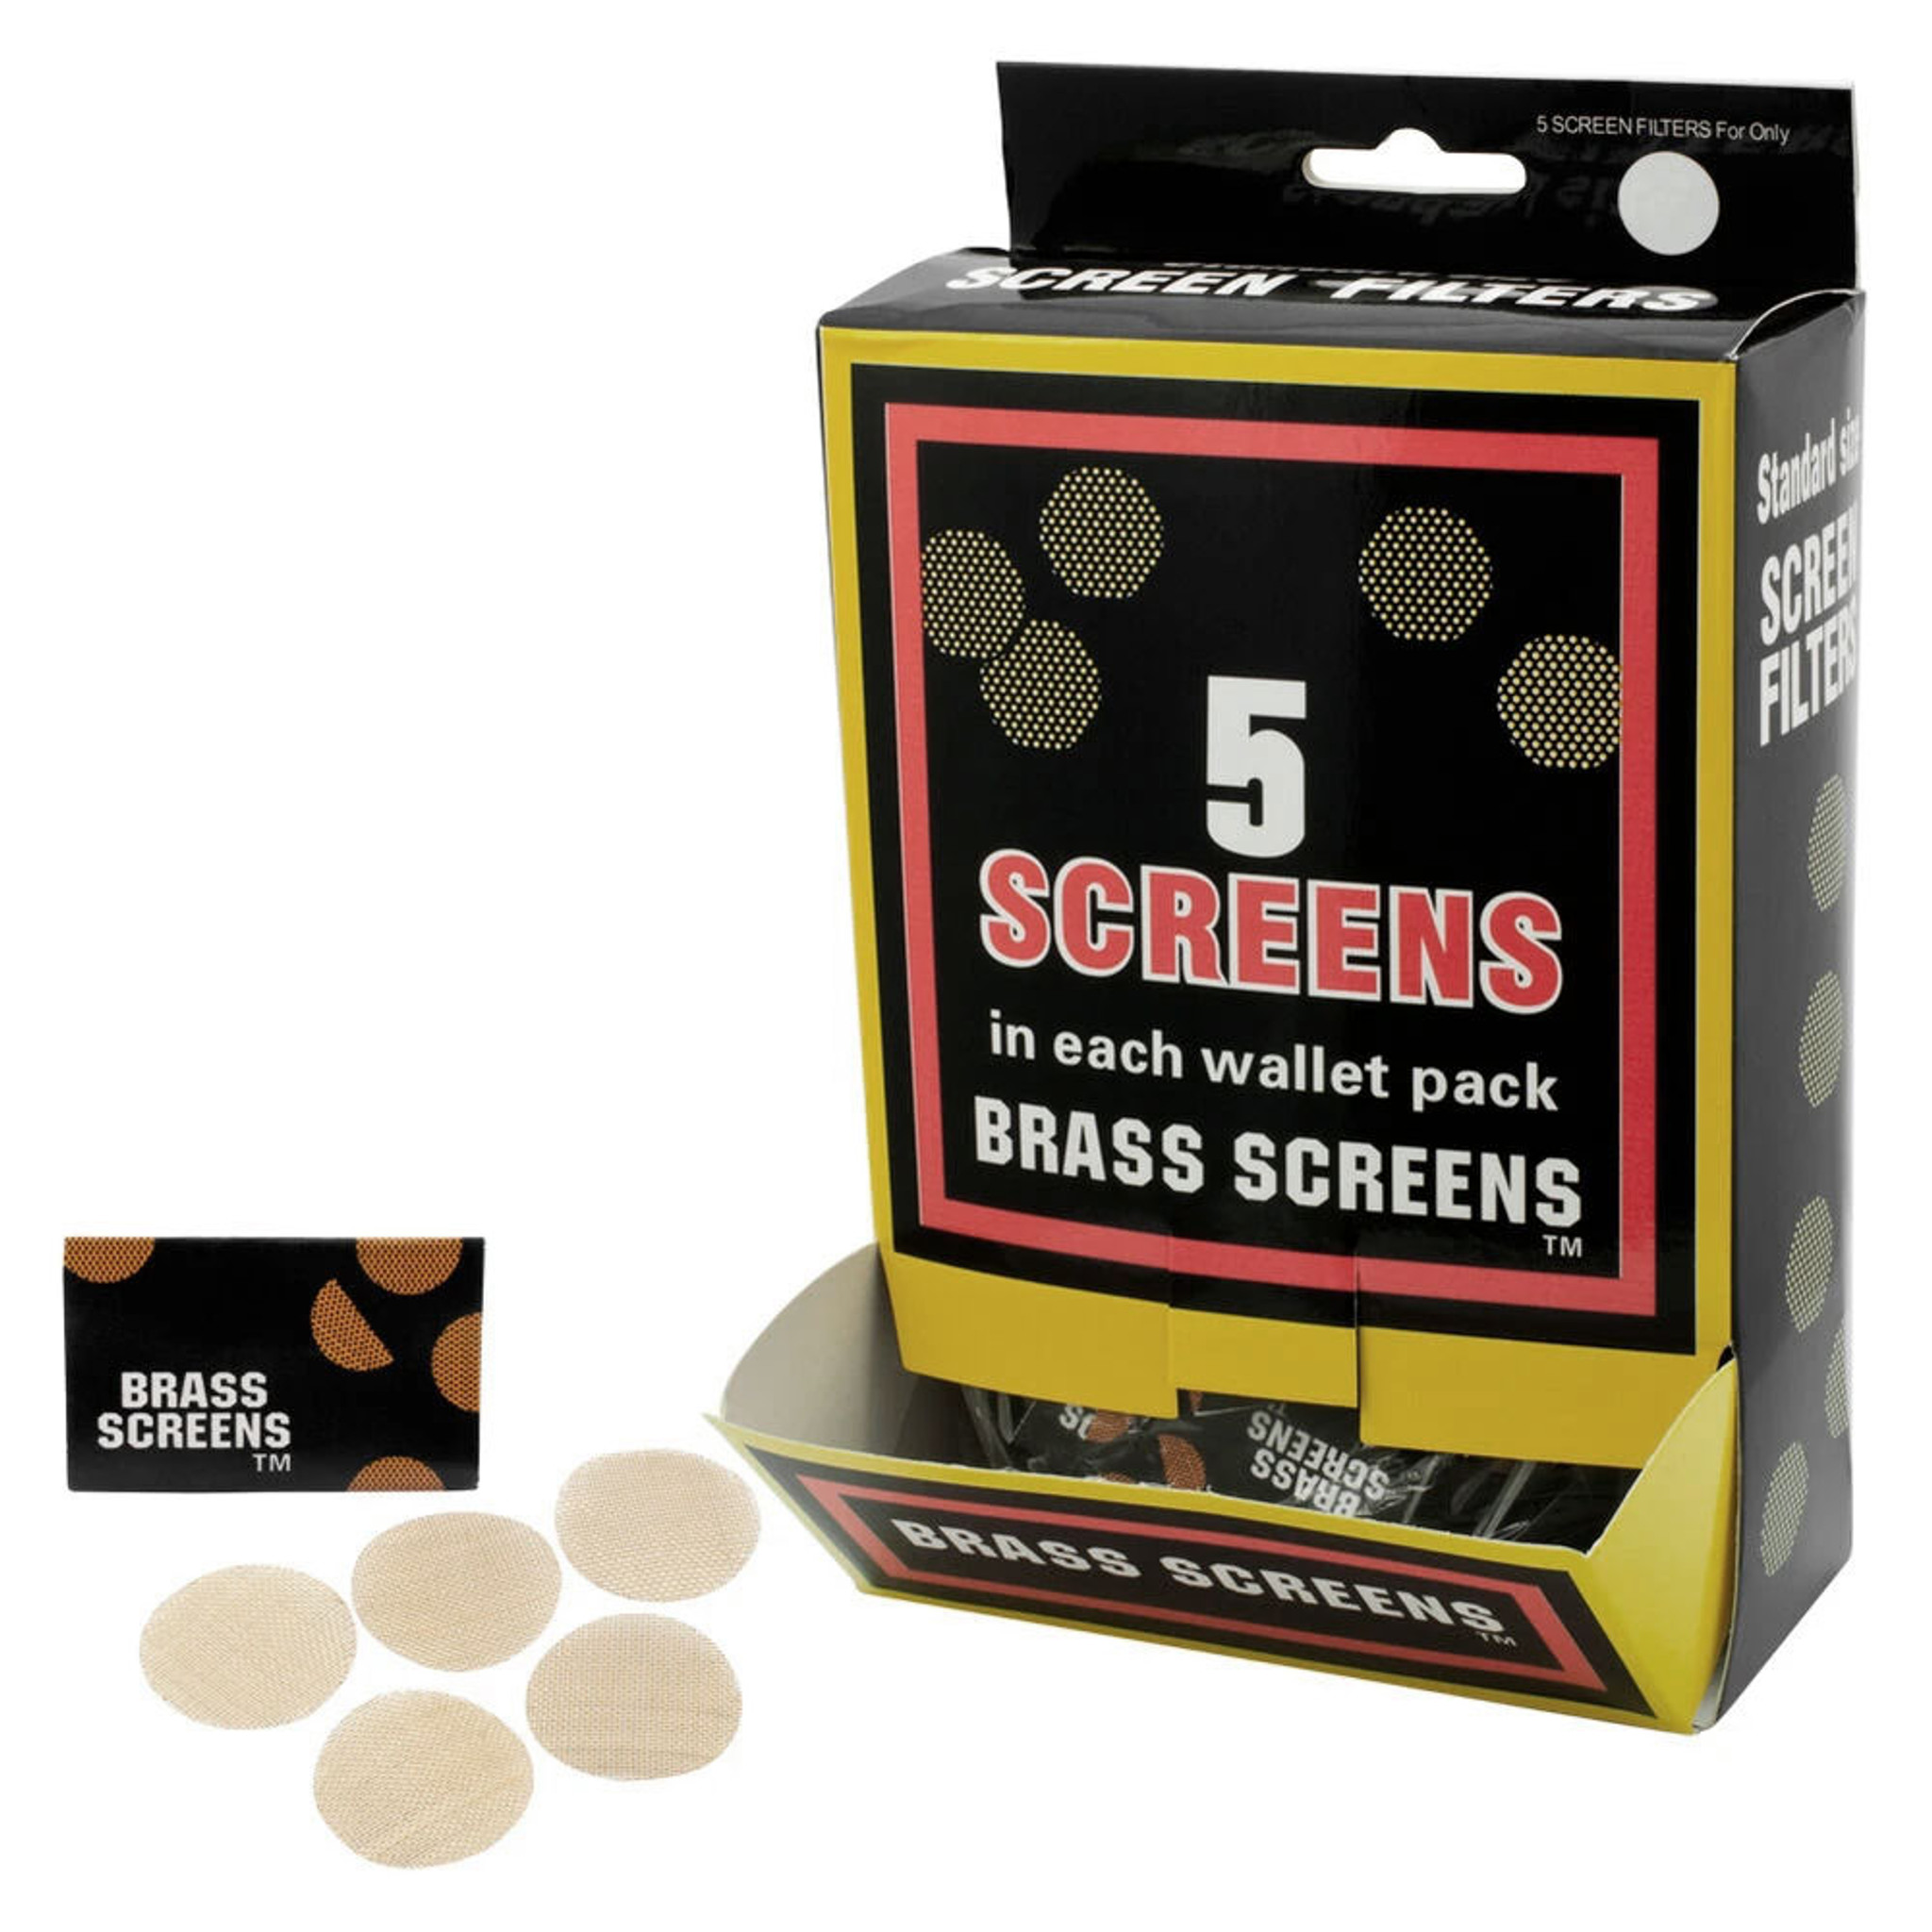 Pipe Screens - Brass Screens Display - Packs of 5